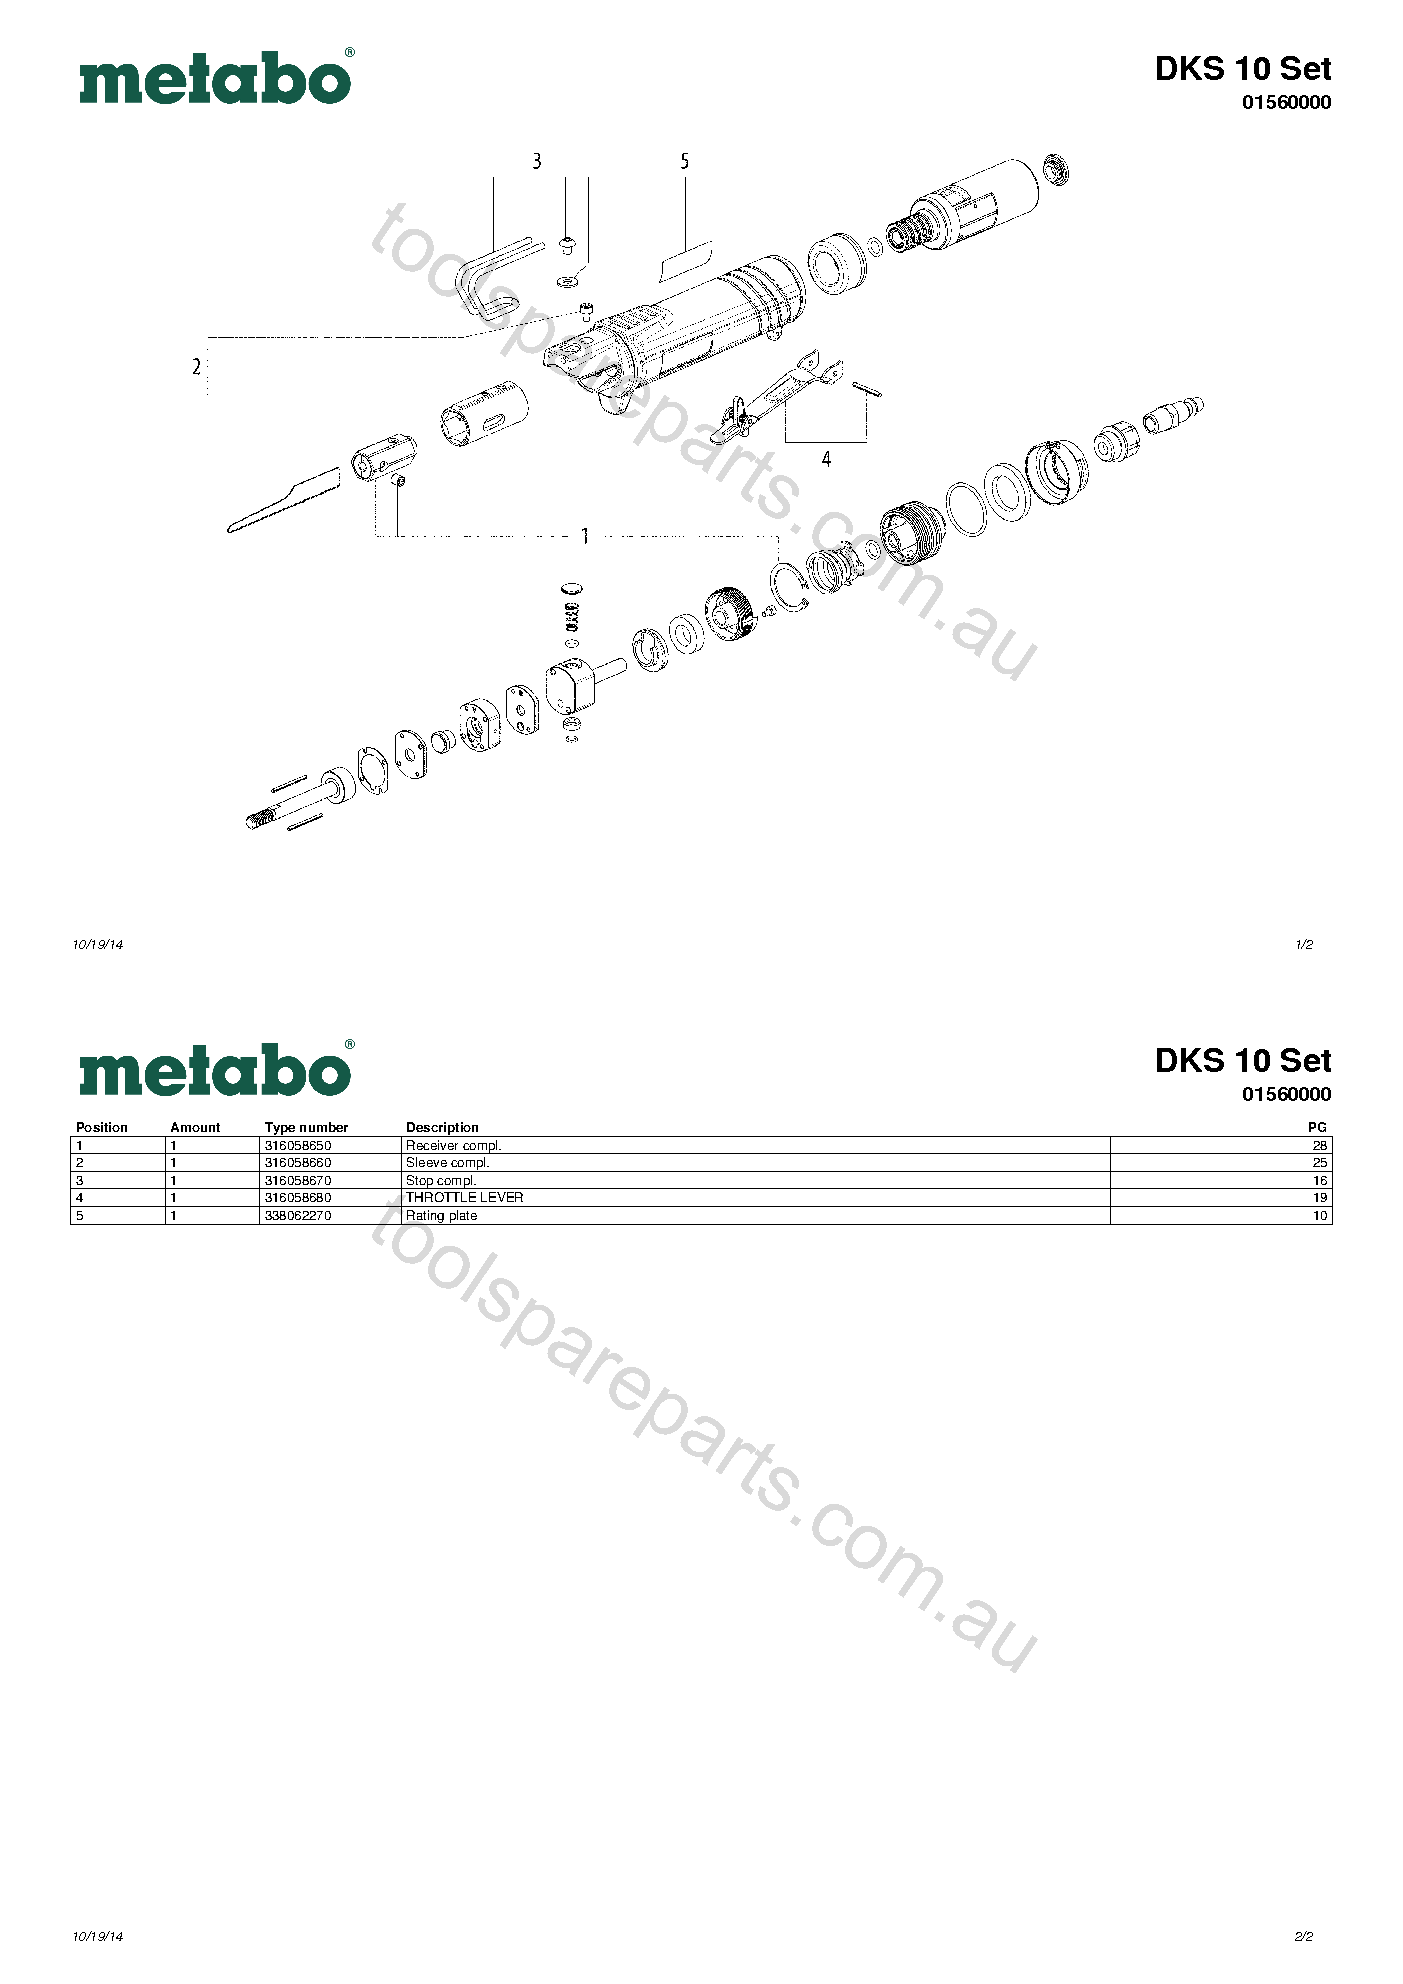 Metabo DKS 10 Set 01560000  Diagram 1